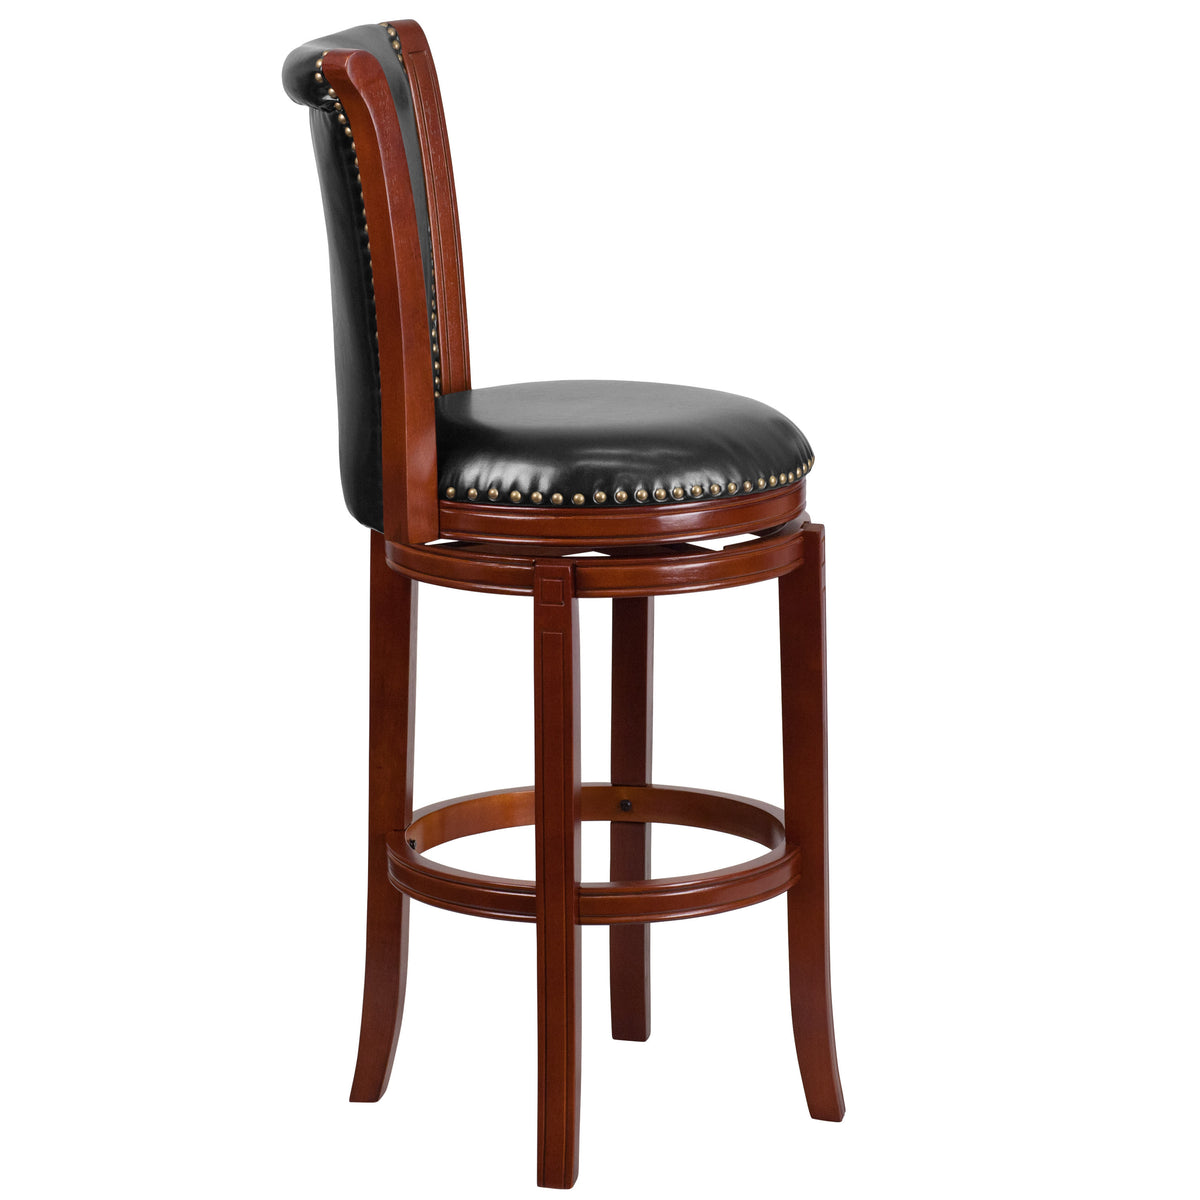 30inch High Dk Chestnut Wood Barstool w/Panel Back & Black LeatherSoft Swivel Seat